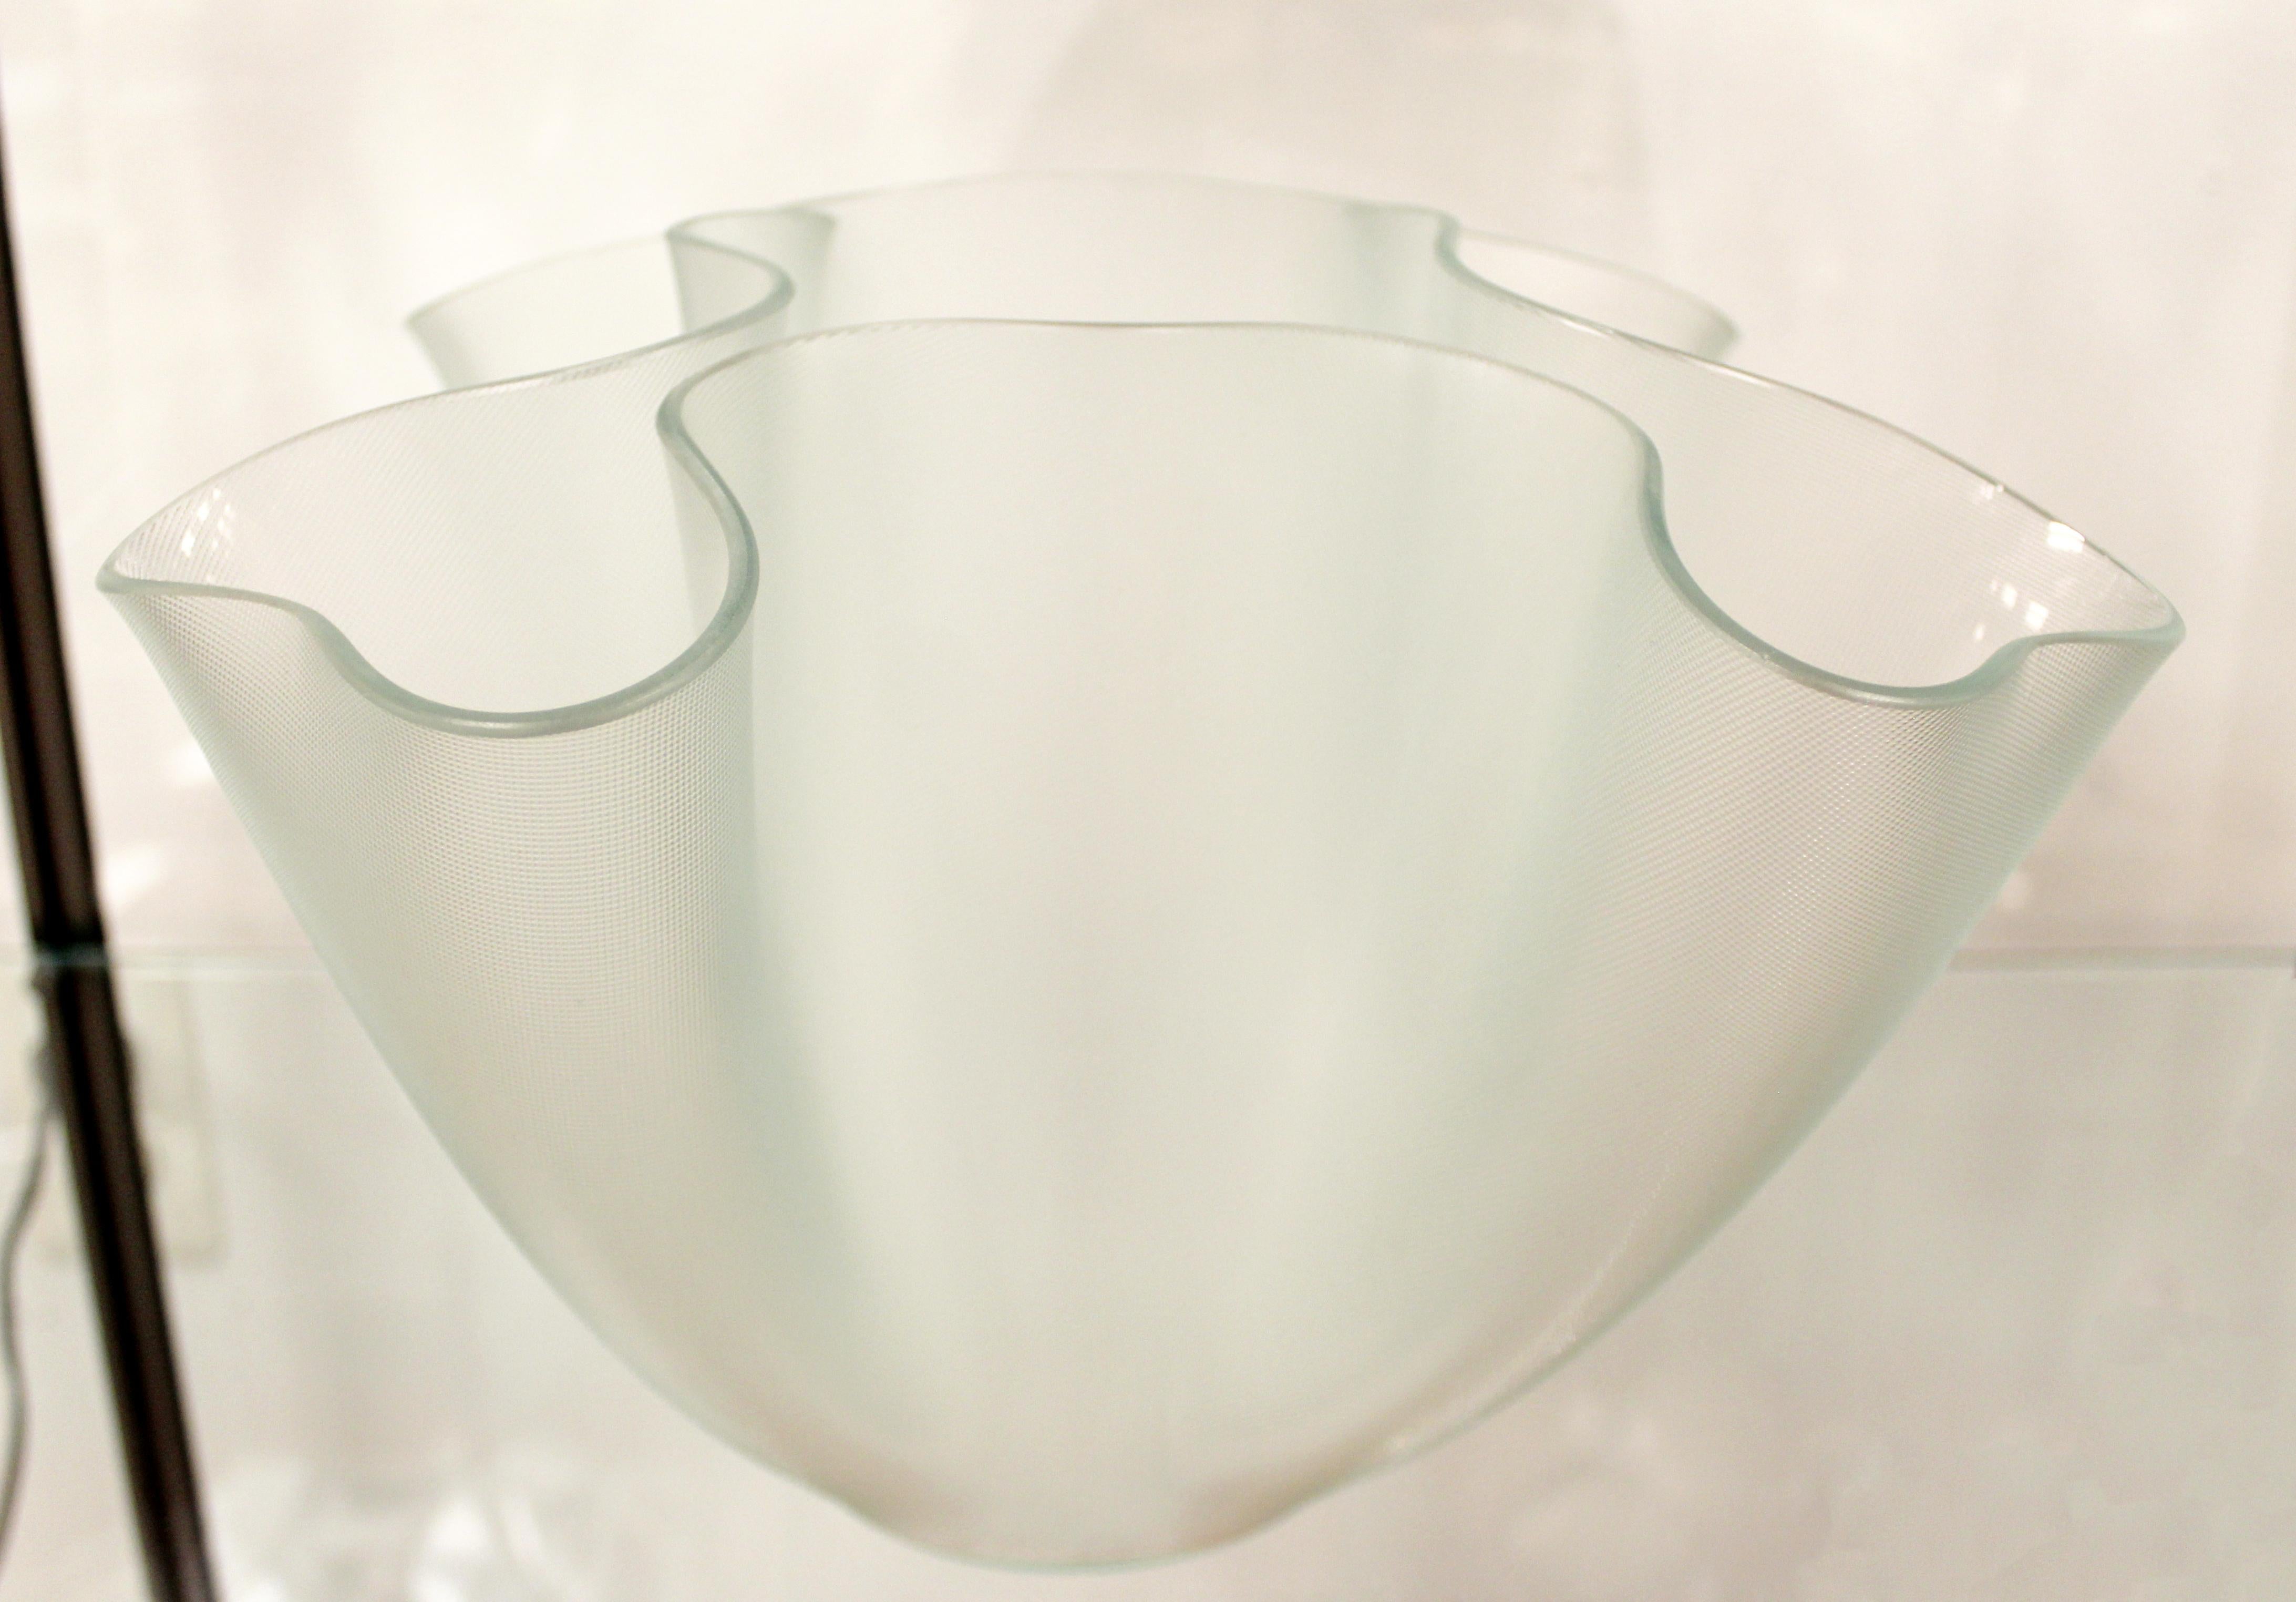 Art Glass Art Deco Modern Fontana Arte Glass Art Bowl Table Sculpture Pietro Chiesa, Italy